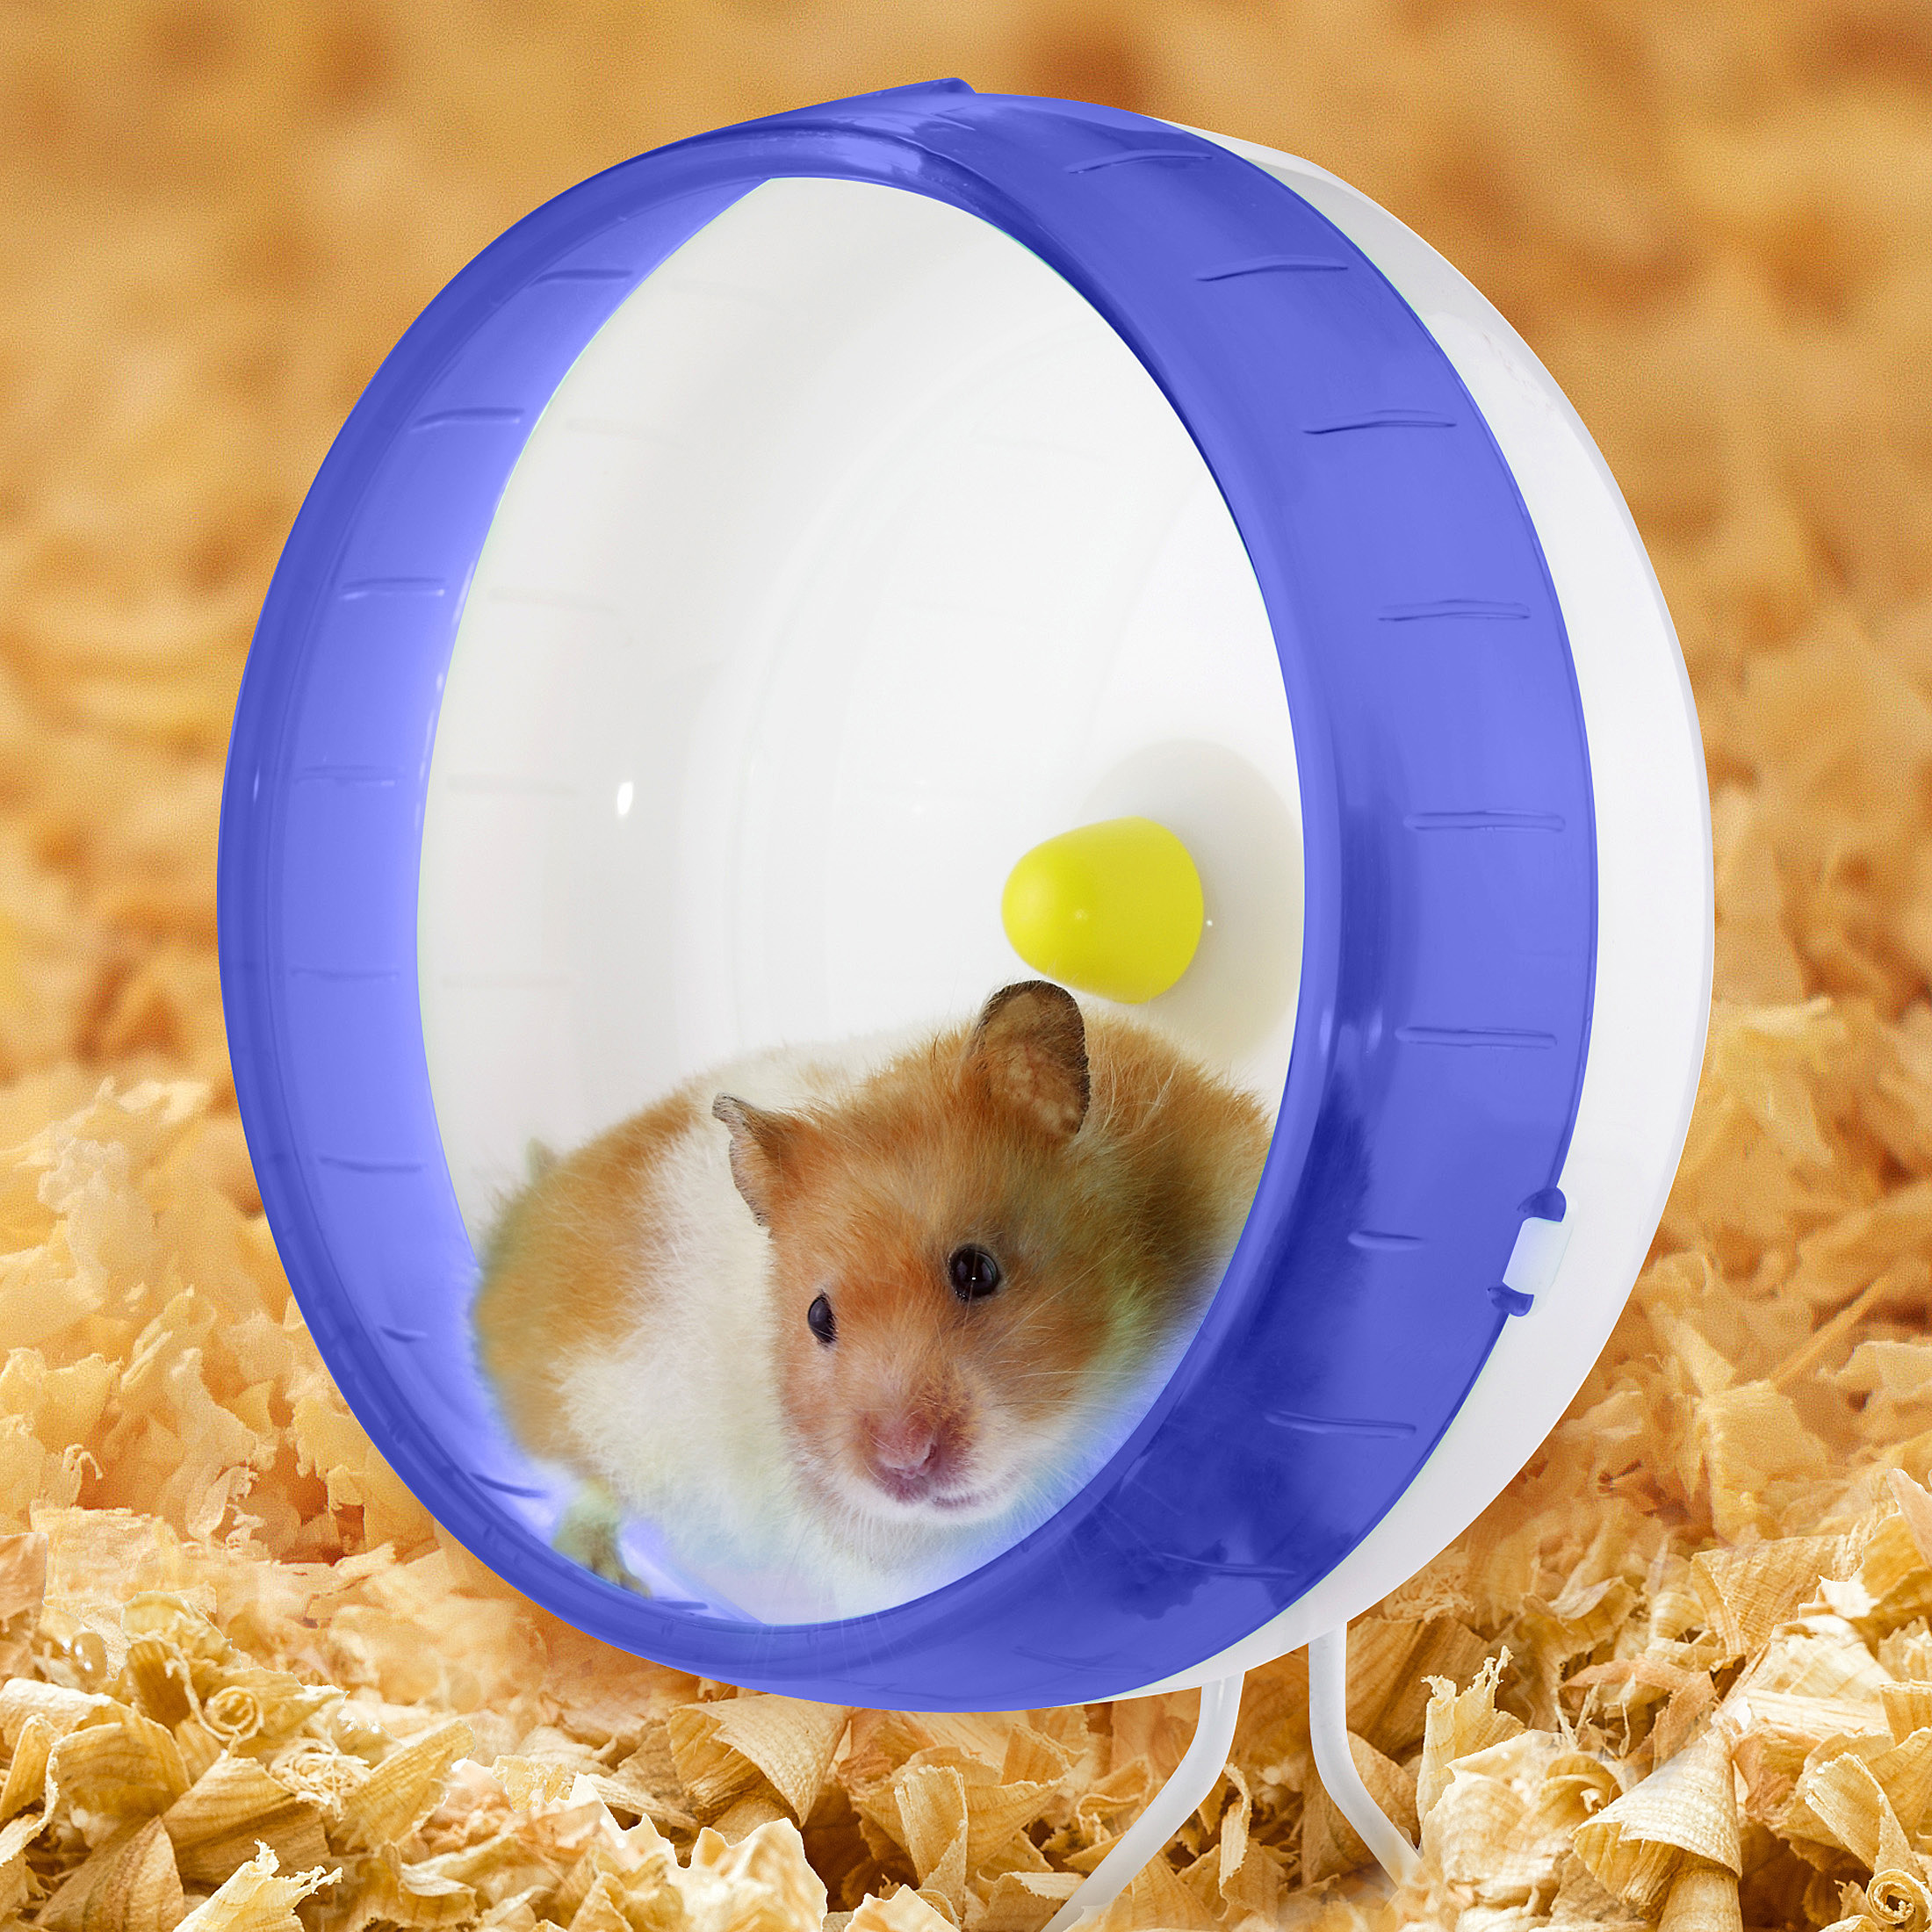 Pet Champion Plastic Quiet Hamster Wheel, 6" - image 2 of 7